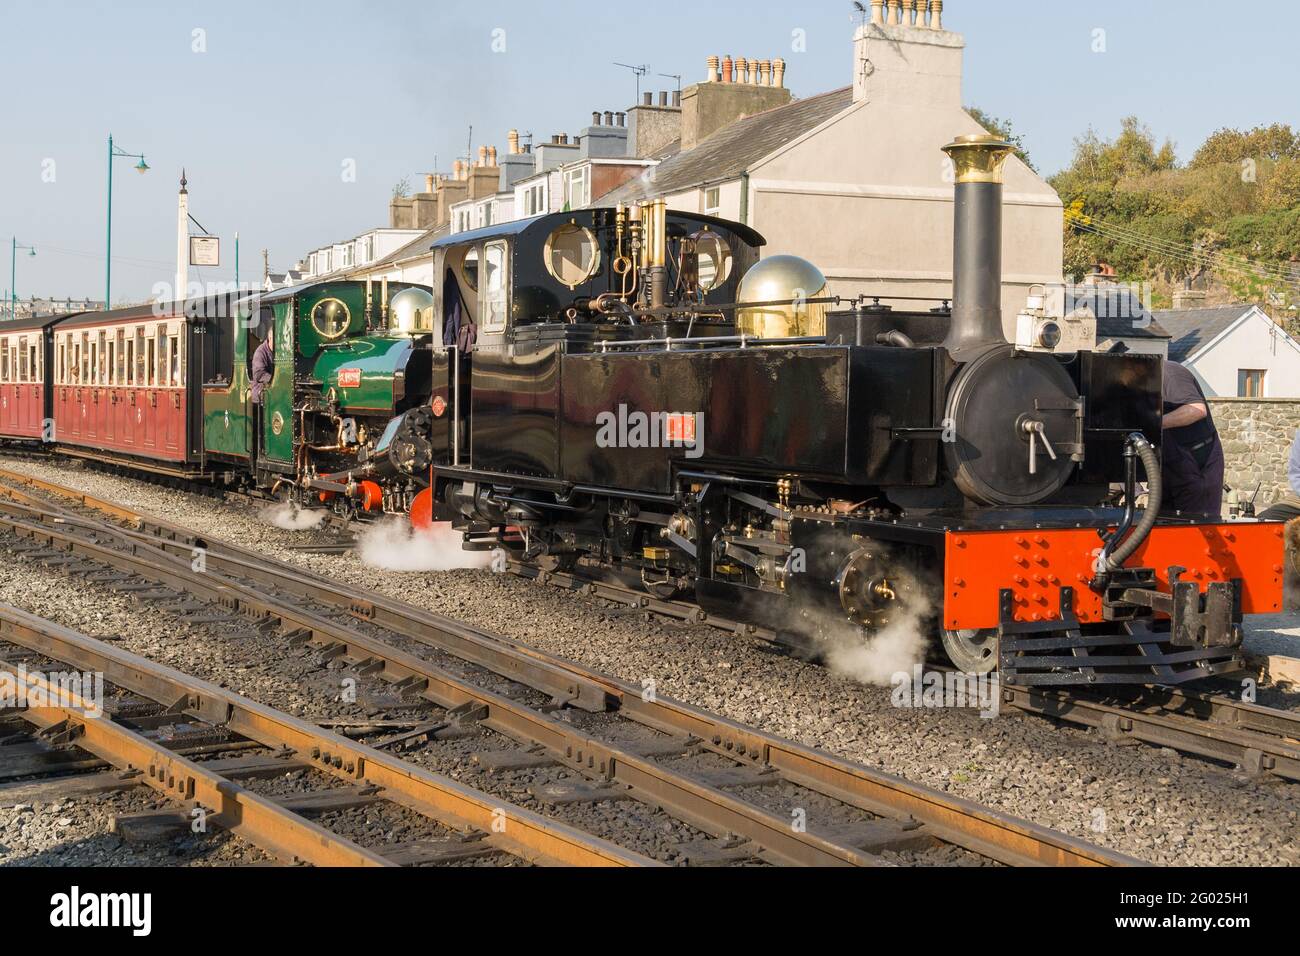 The Ffestiniog Railway - Wales Stock Photo